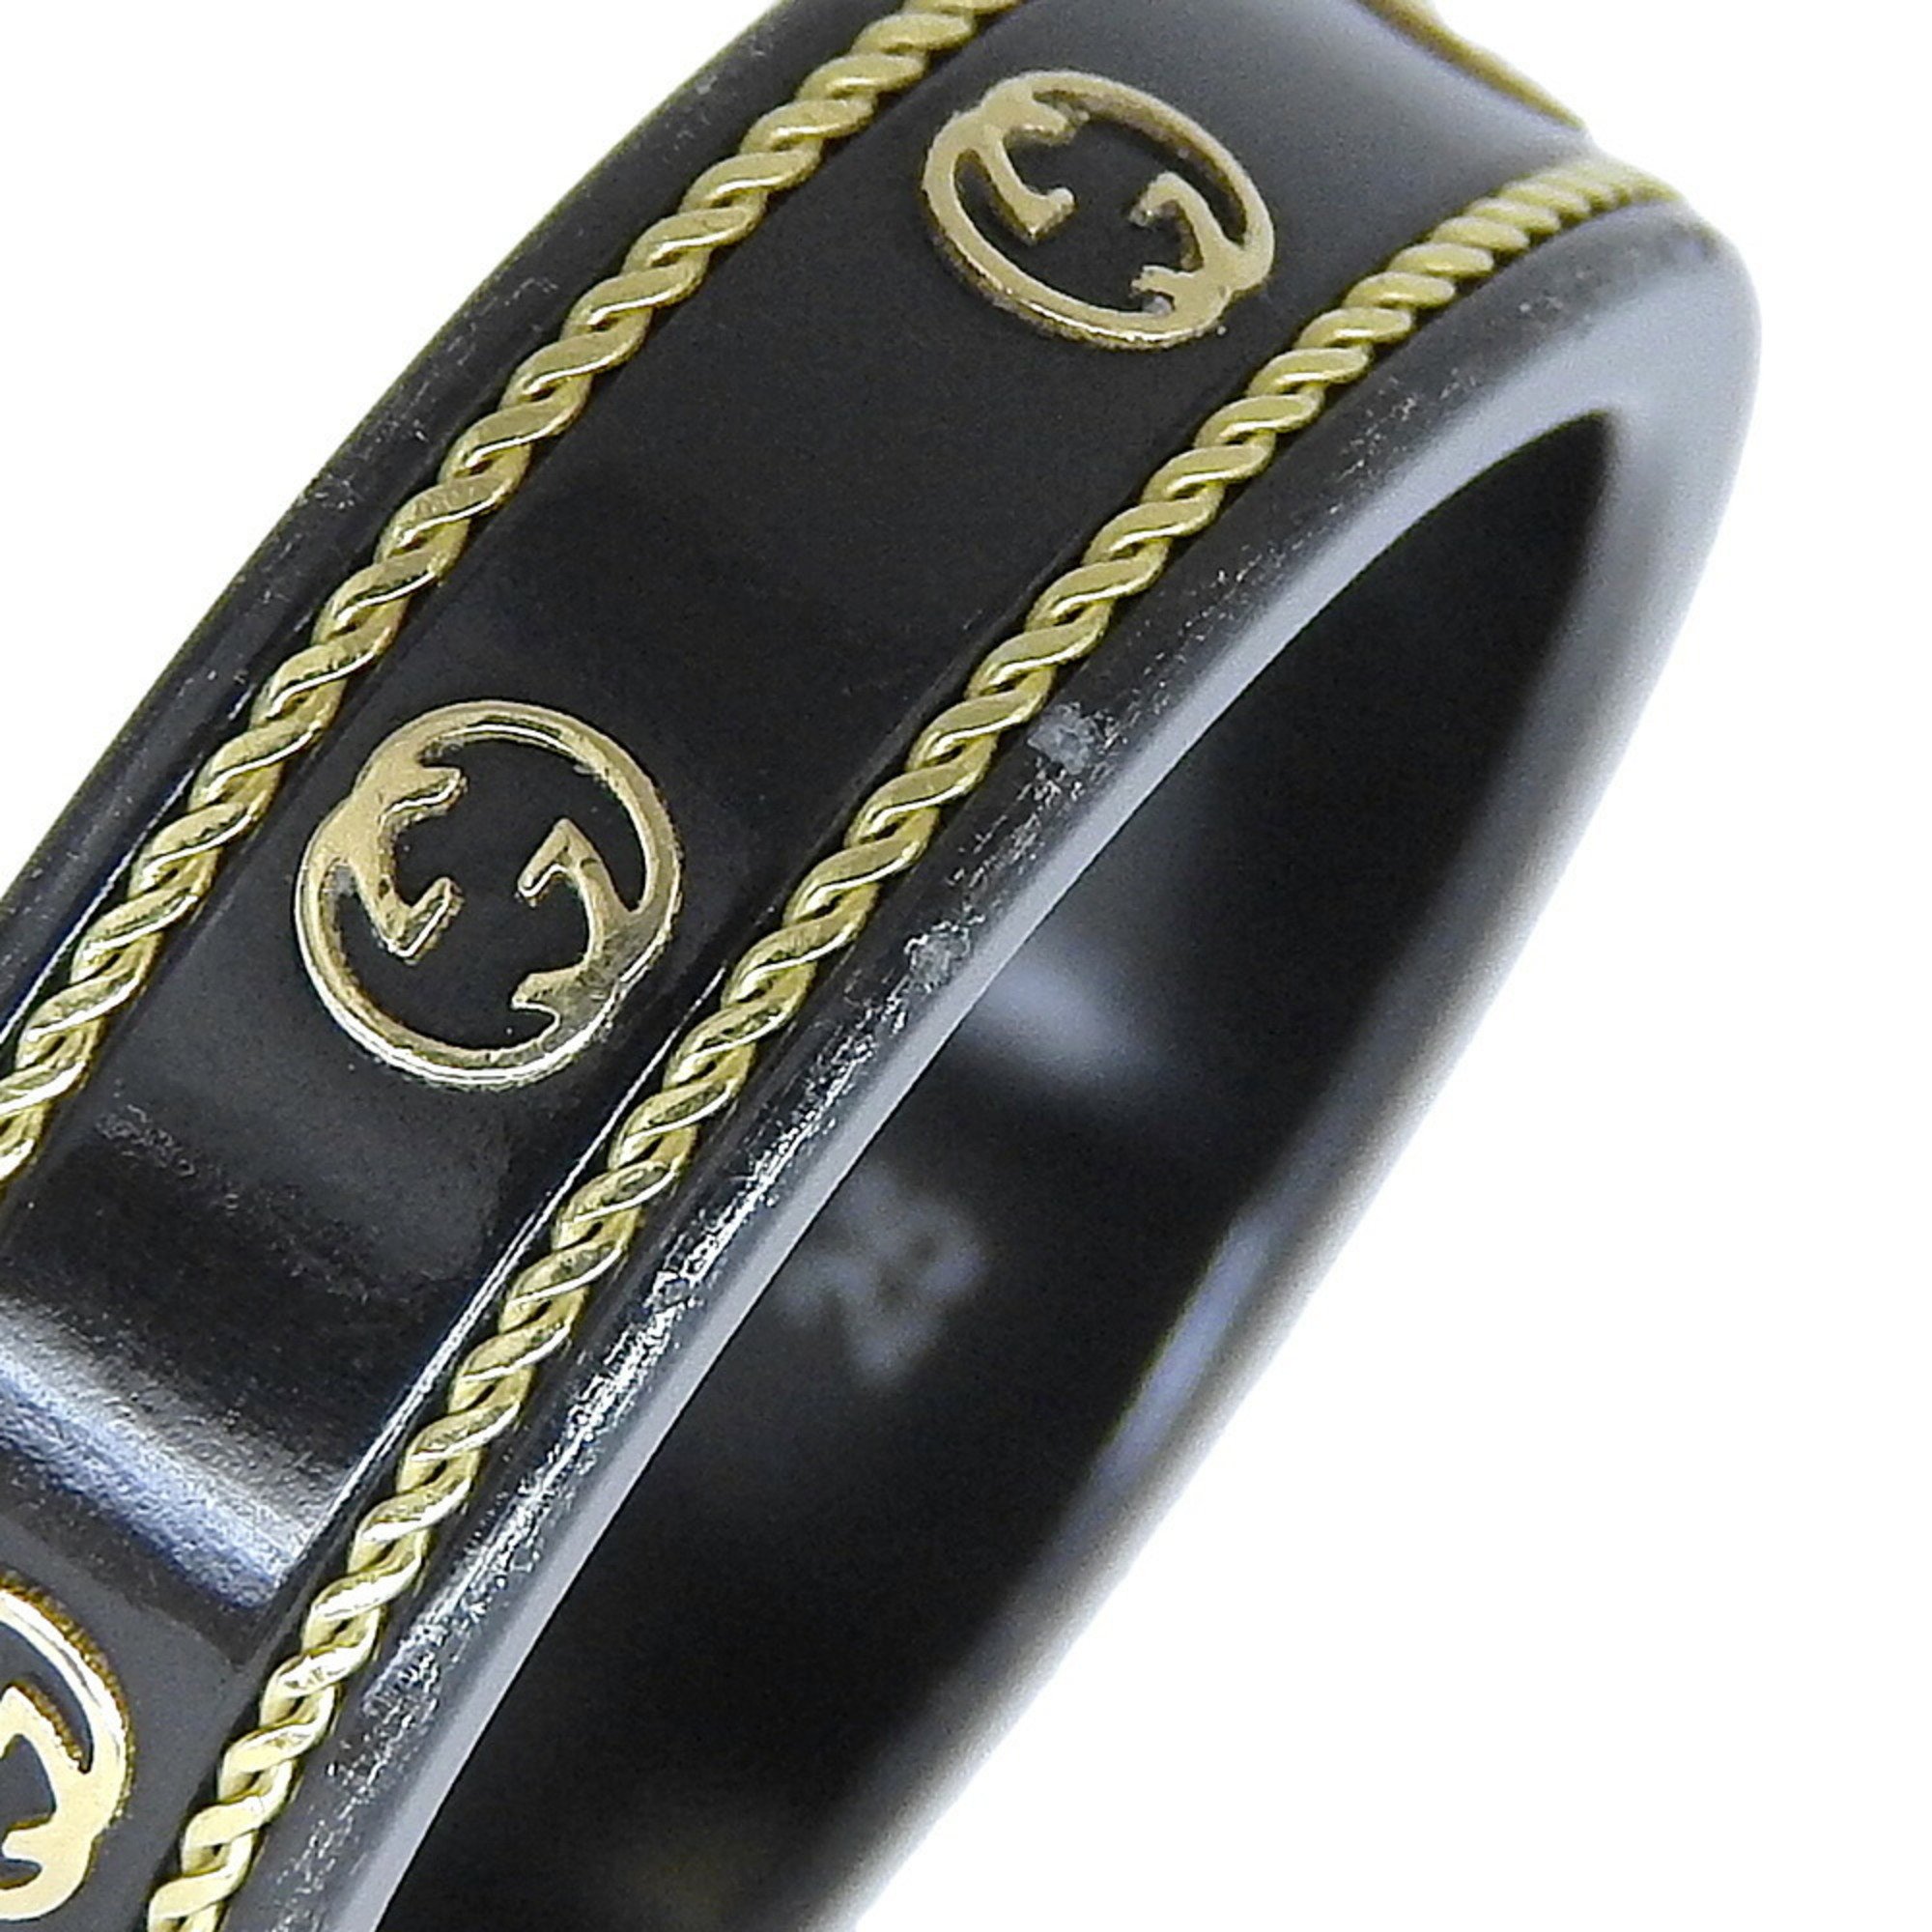 Gucci Interlocking G size 24 ring, ceramic x 18K yellow gold, approx. 3.2g, G, men's